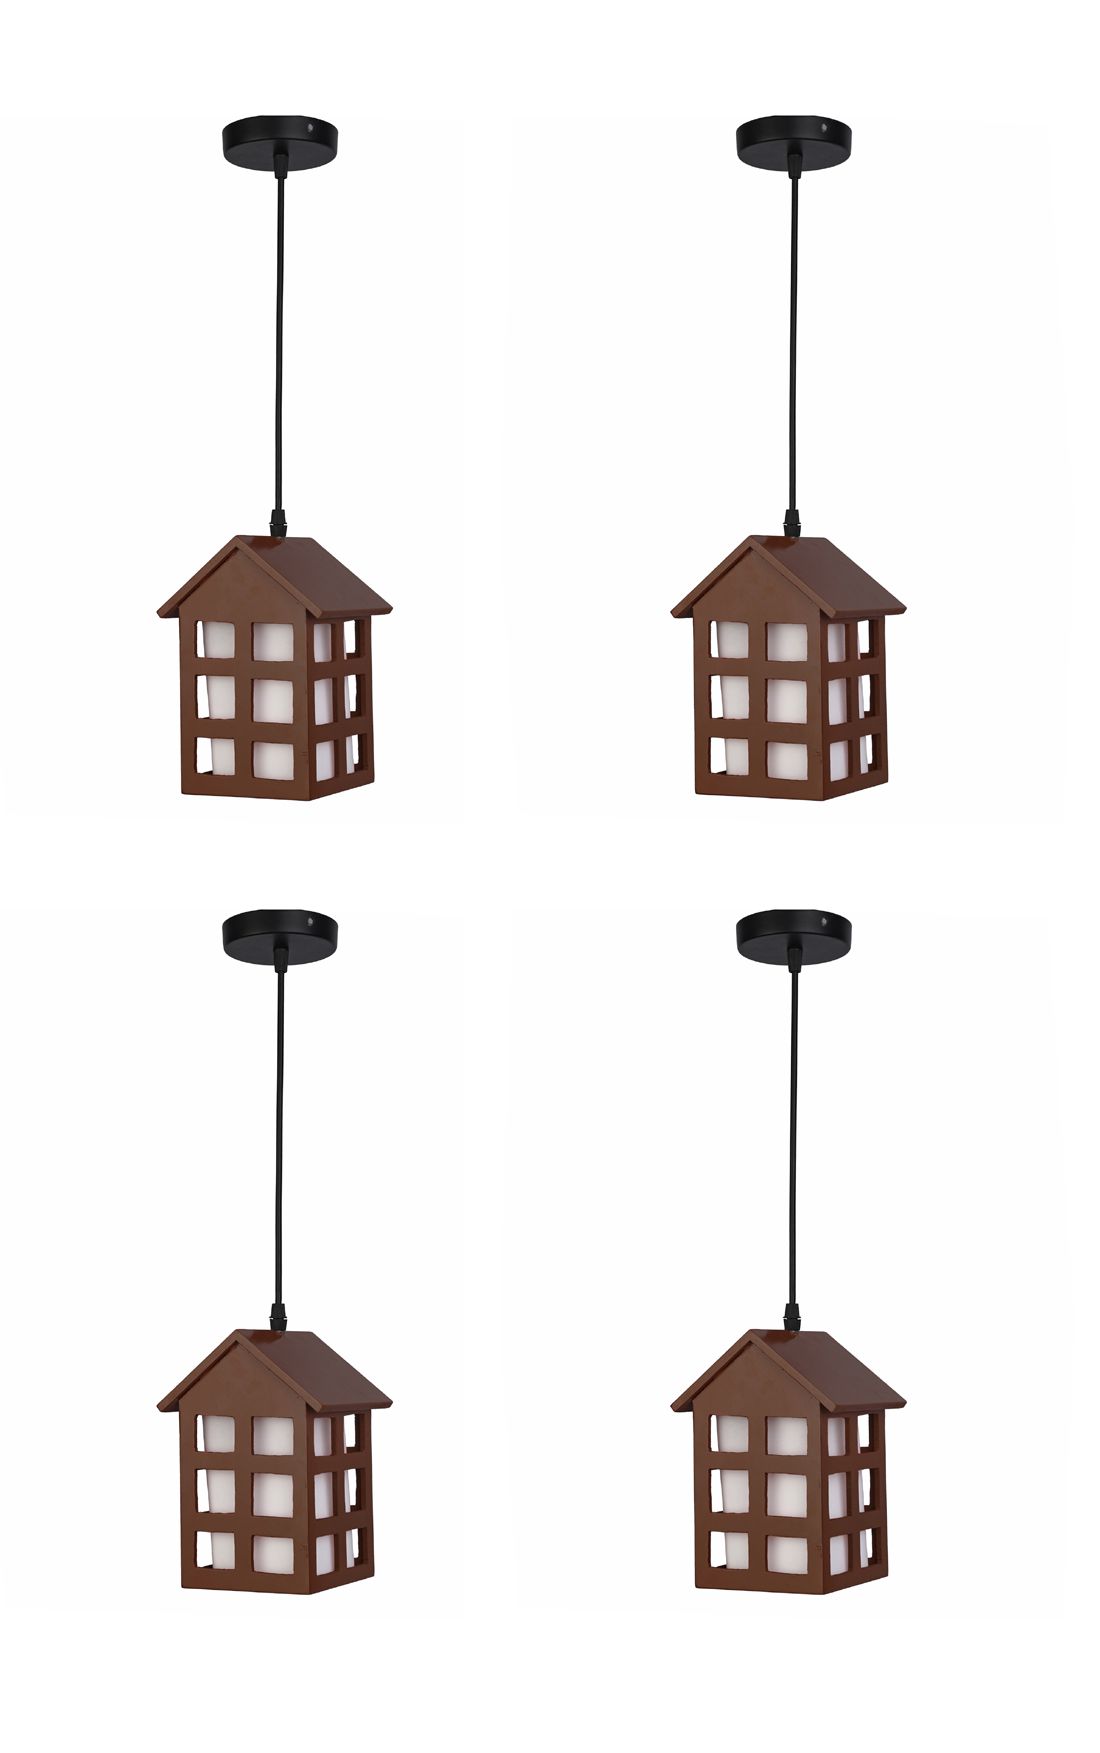     			Somil Wood Hanging Lamp Pendant Maroon - Pack of 4